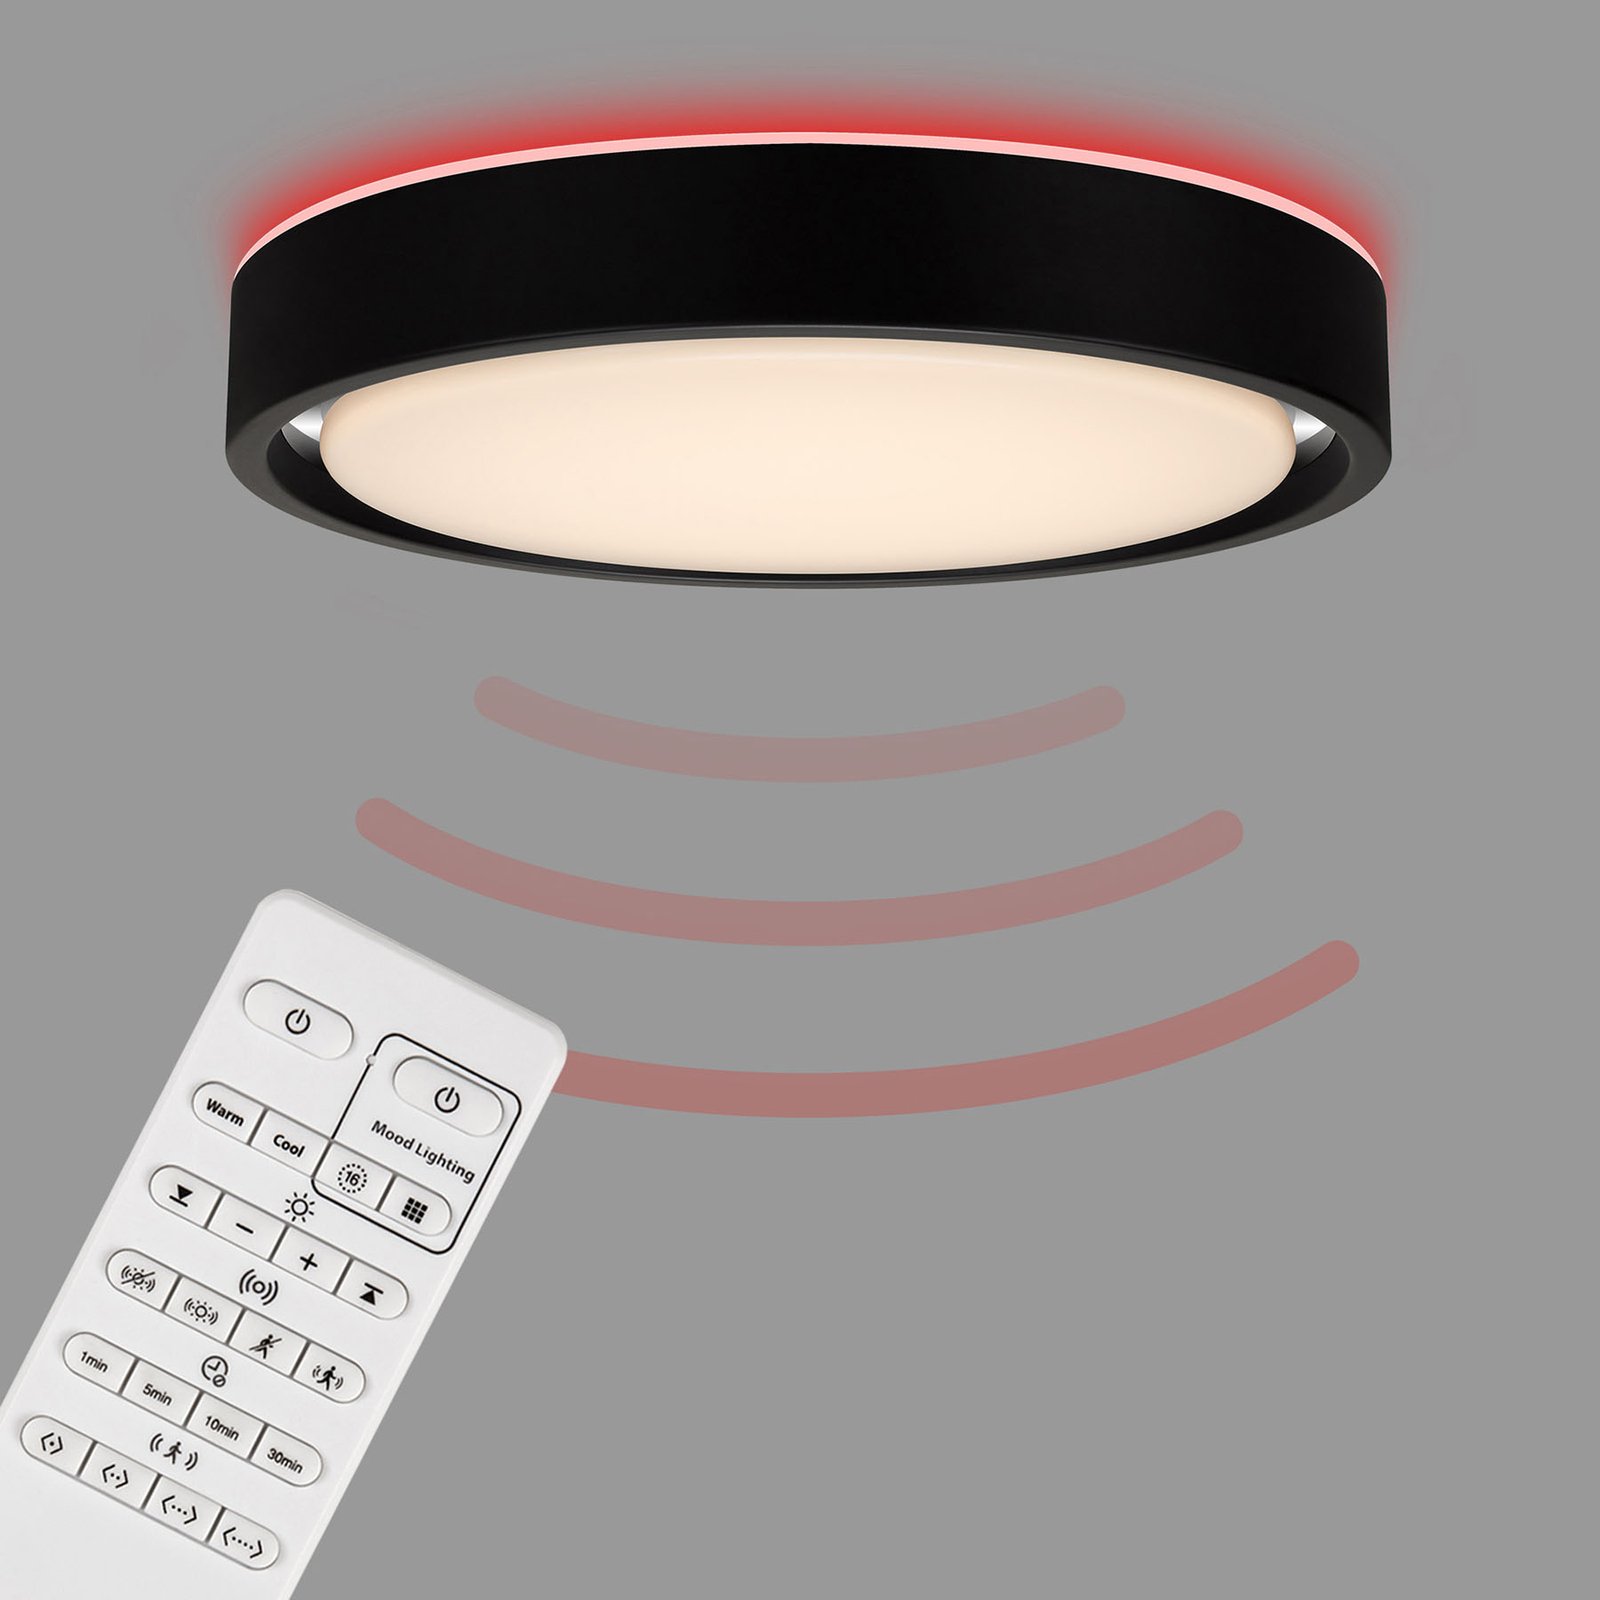 tekort Geaccepteerd Rondsel LED plafondlamp Talena M RGB CCT met sensor | Lampen24.nl